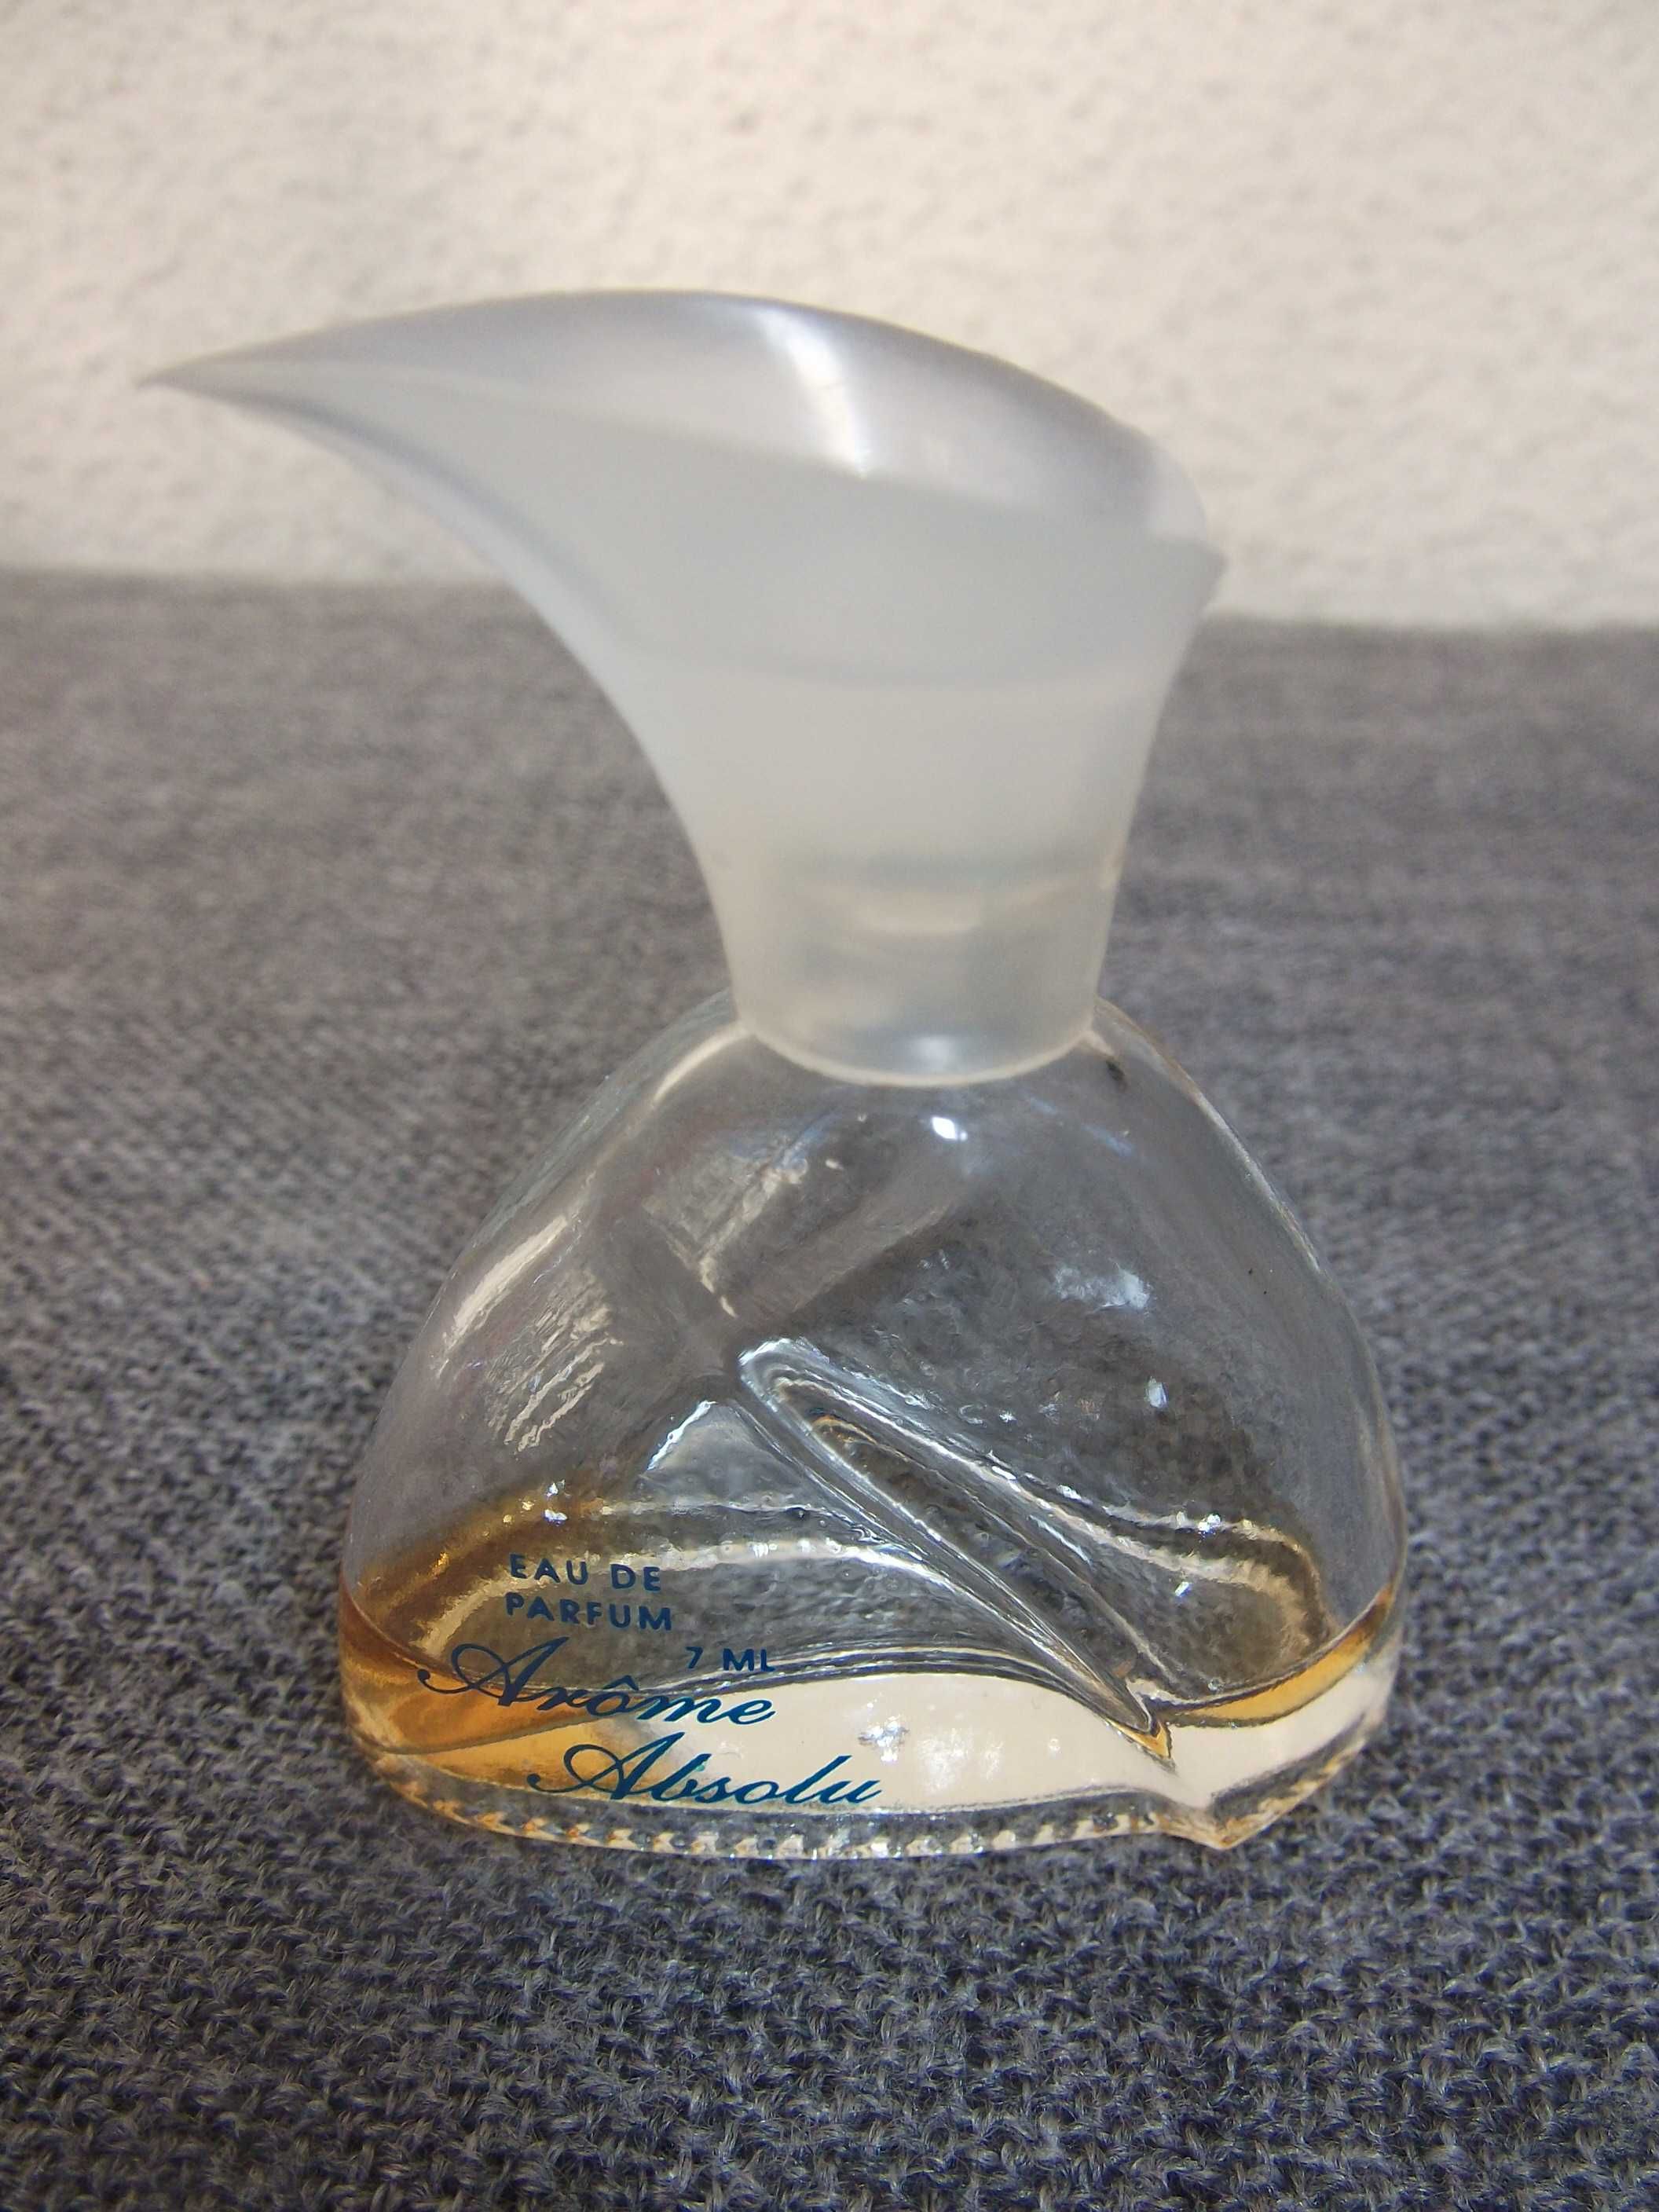 Frascos de perfume (SEM PERFUME) / Perfume bottles (WITHOUT PERFUME)